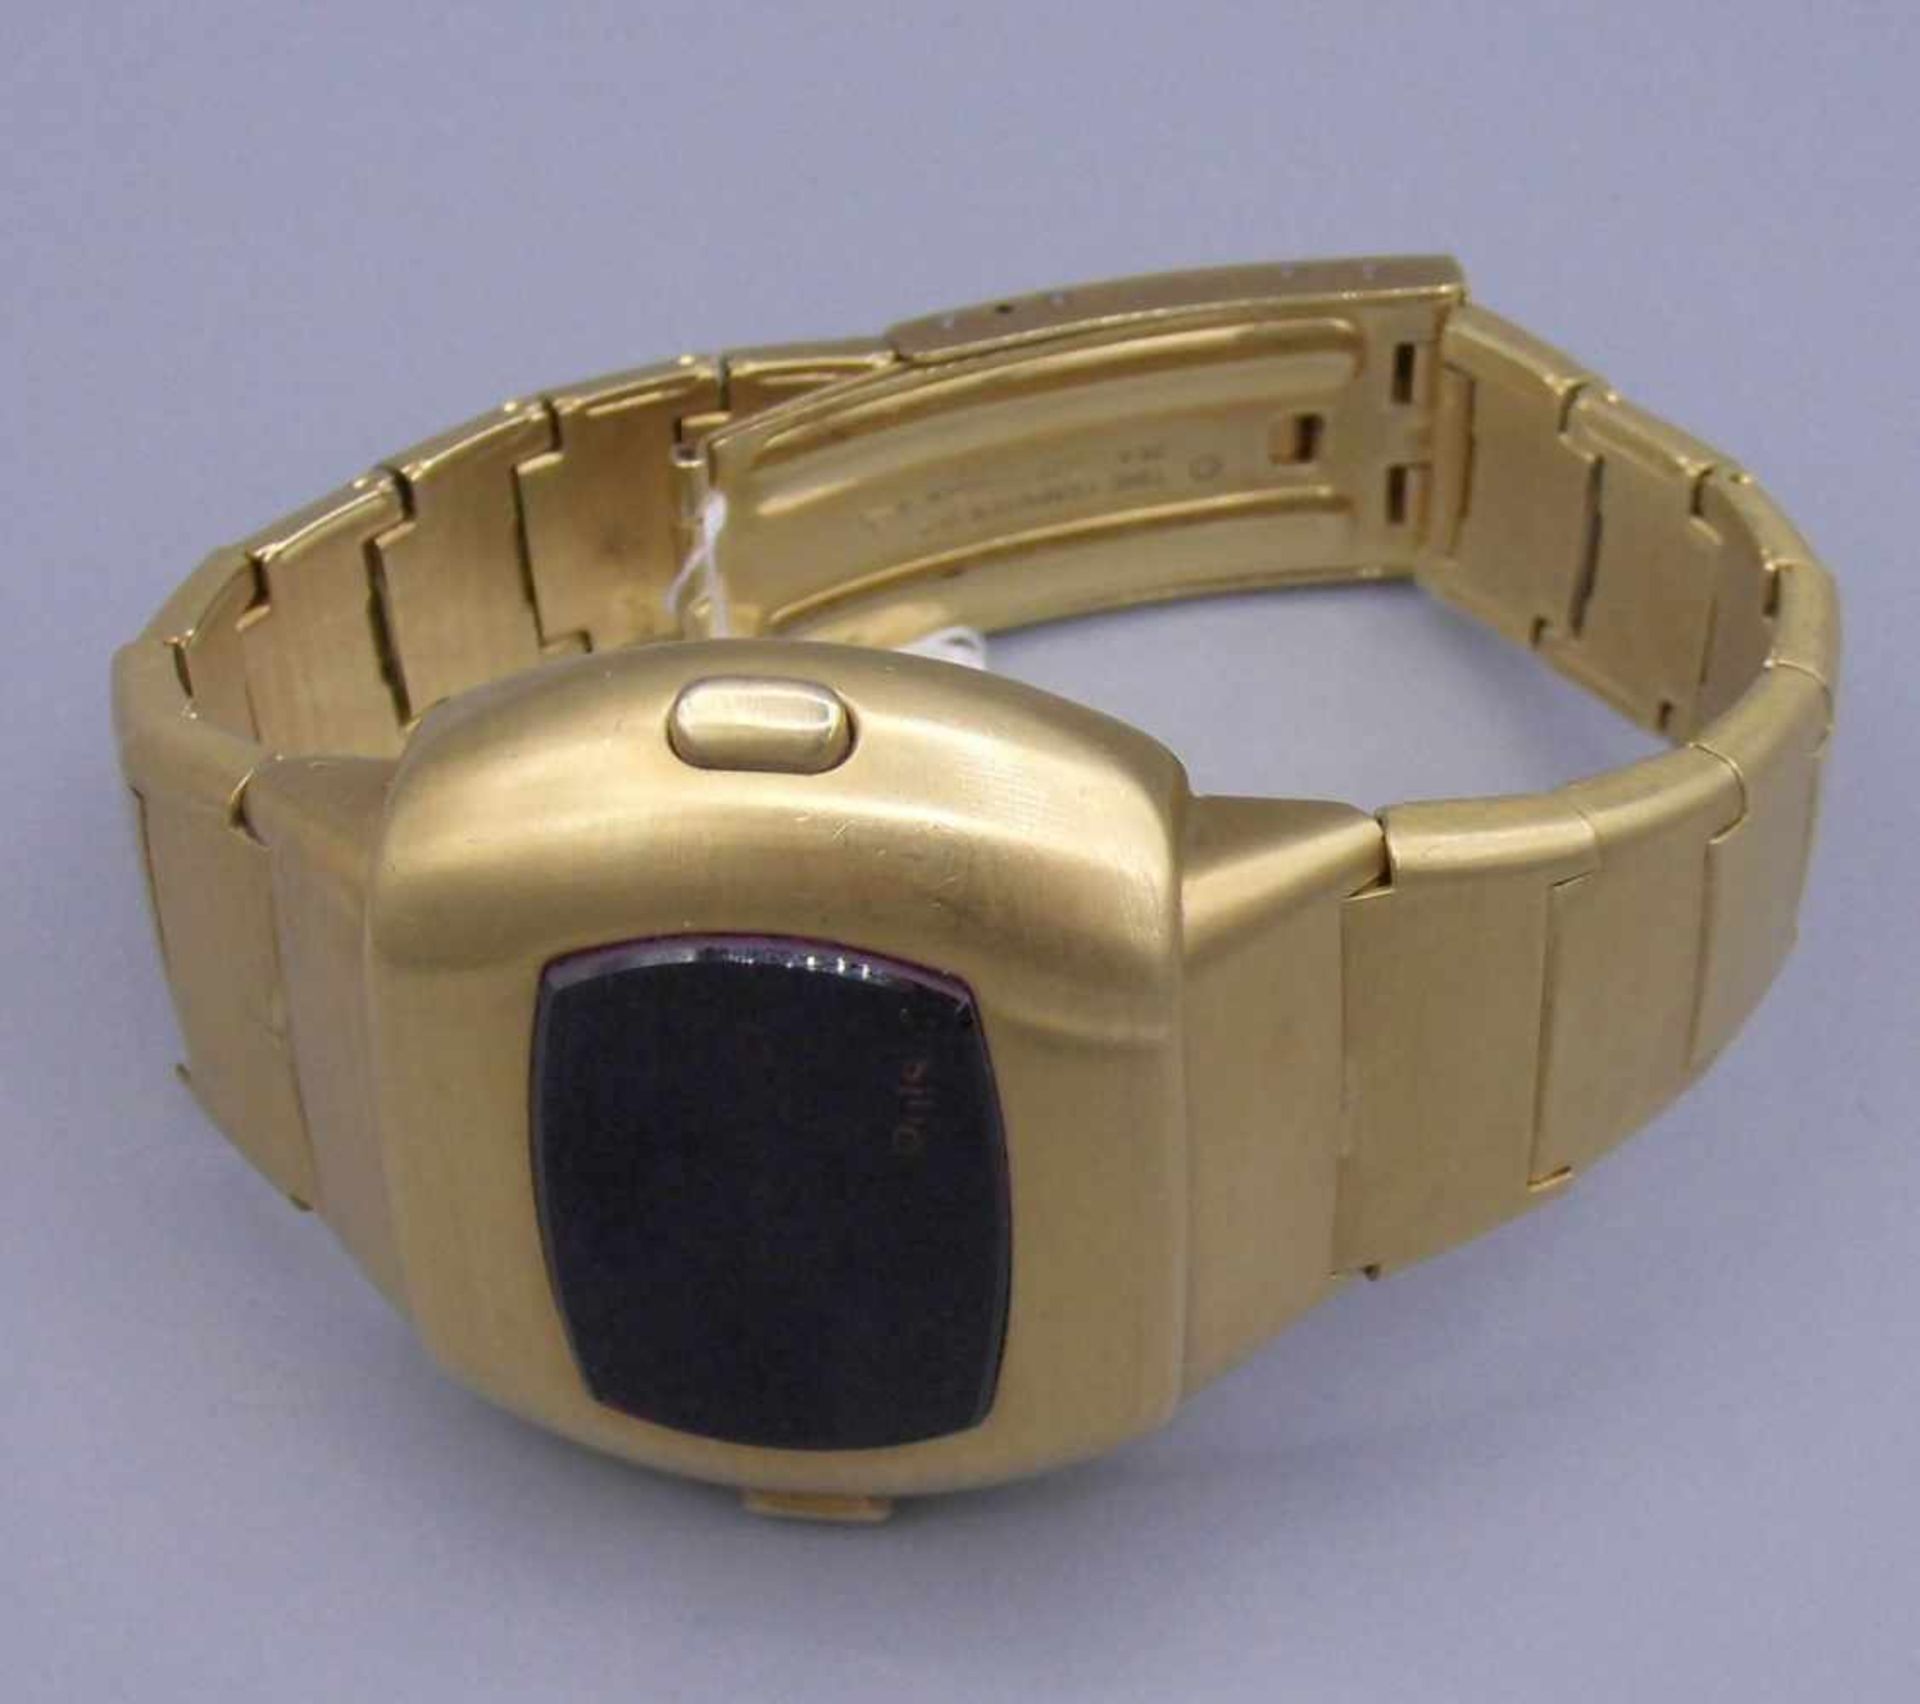 GOLDENE ARMBANDUHR / DIGITALUHR : Pulsar P3 "Date Command" / digital watch, 1970er Jahre, Gehäuse - Image 3 of 7